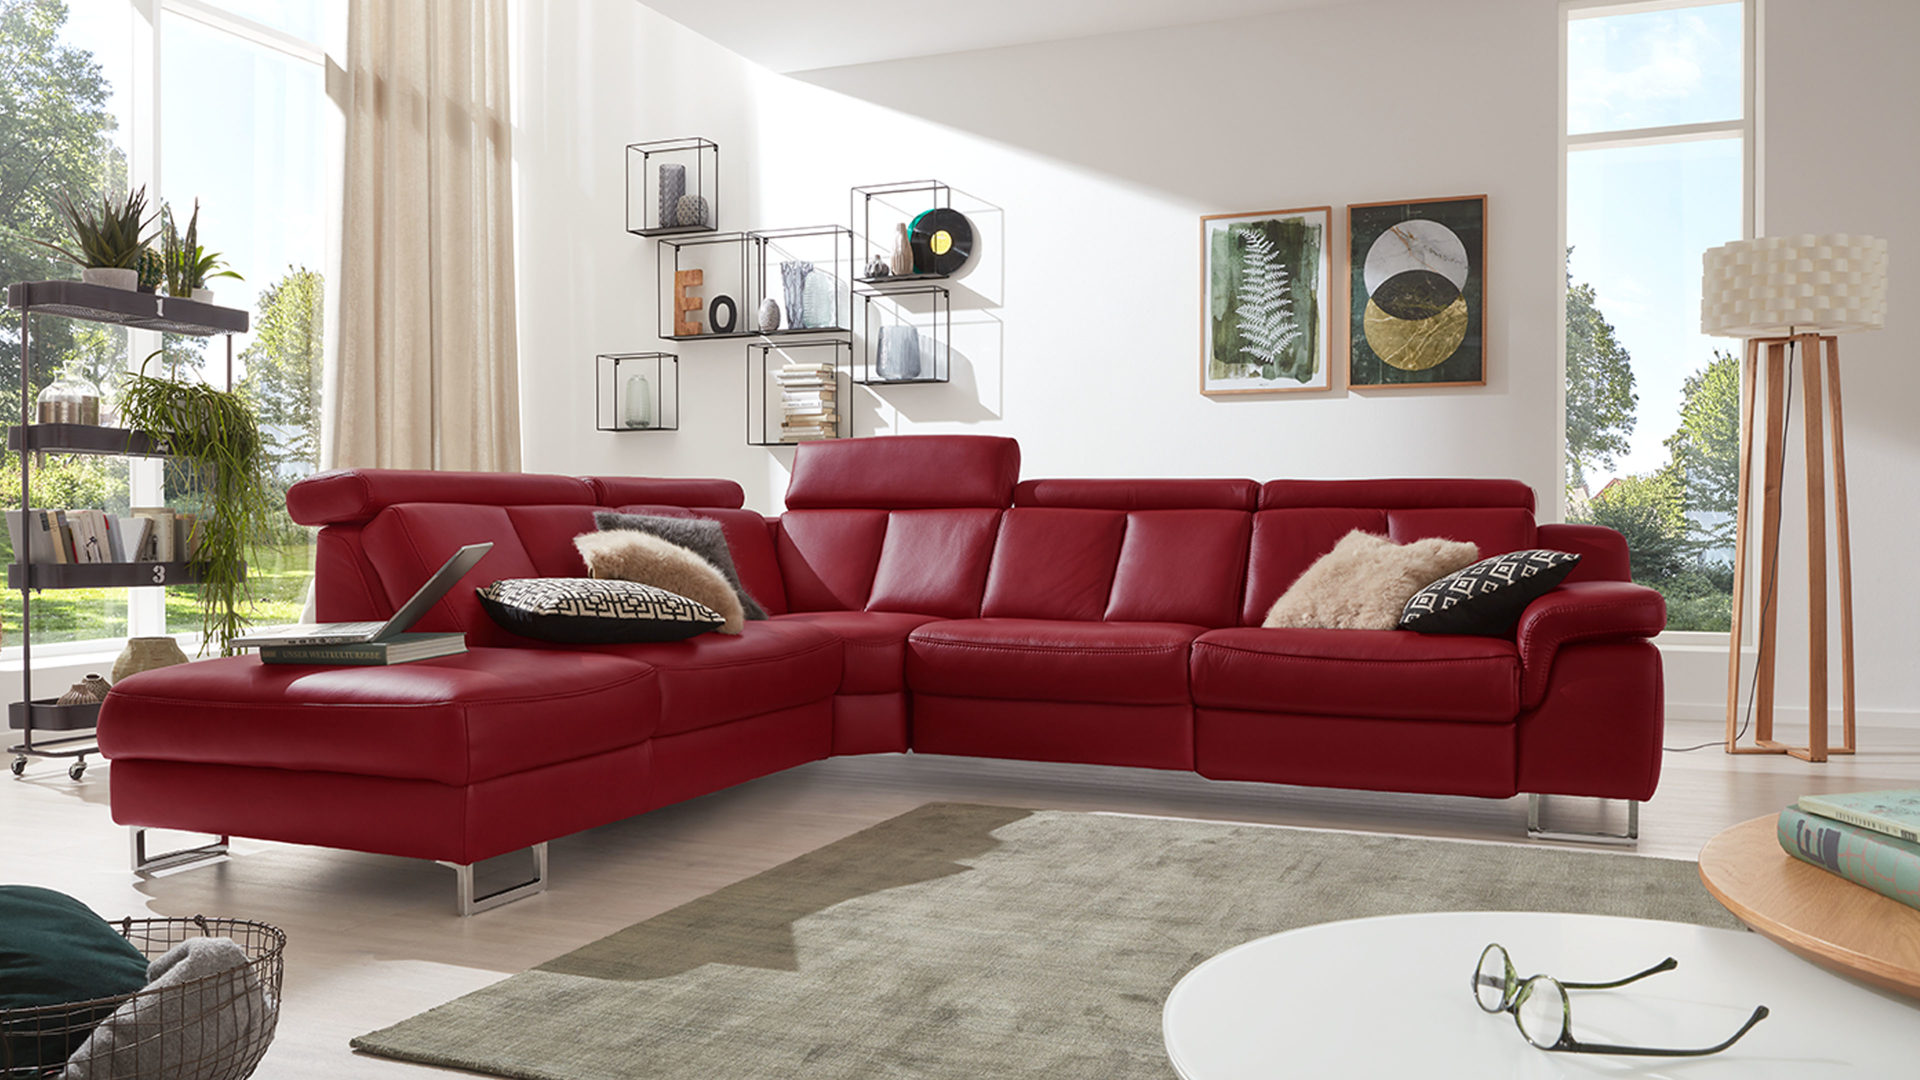 Ecksofa Interliving aus Leder in Rot Interliving Sofa Serie 4050 – Ecksofa rotes LongLife-Leder Cloudy & Chromfüße – Stellfläche ca. 261 x 300 cm